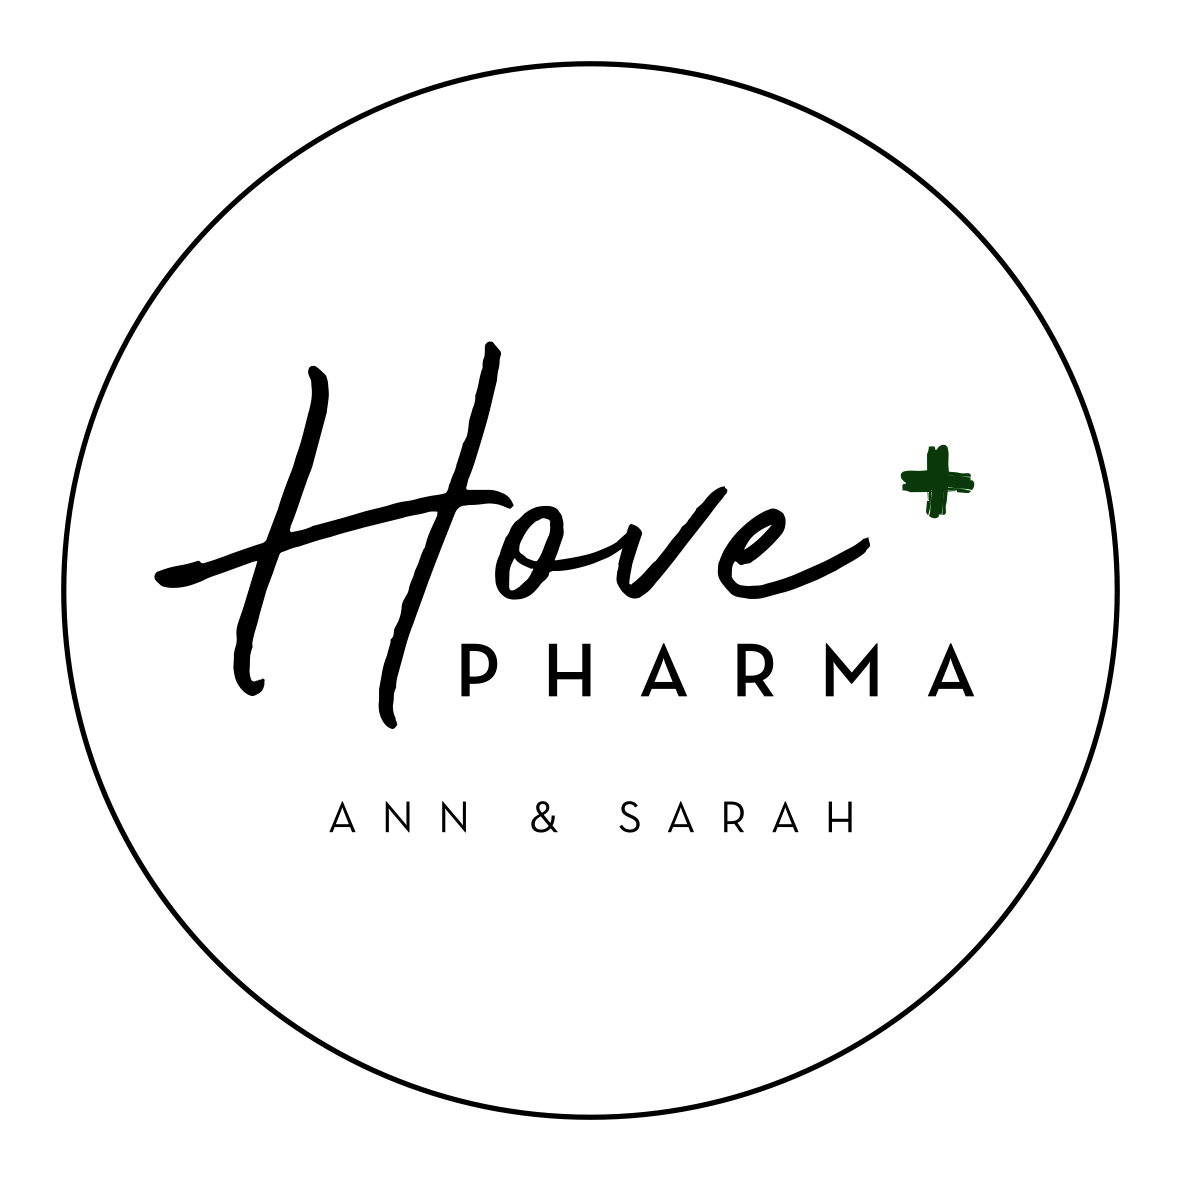 Hove Pharma (B4K)